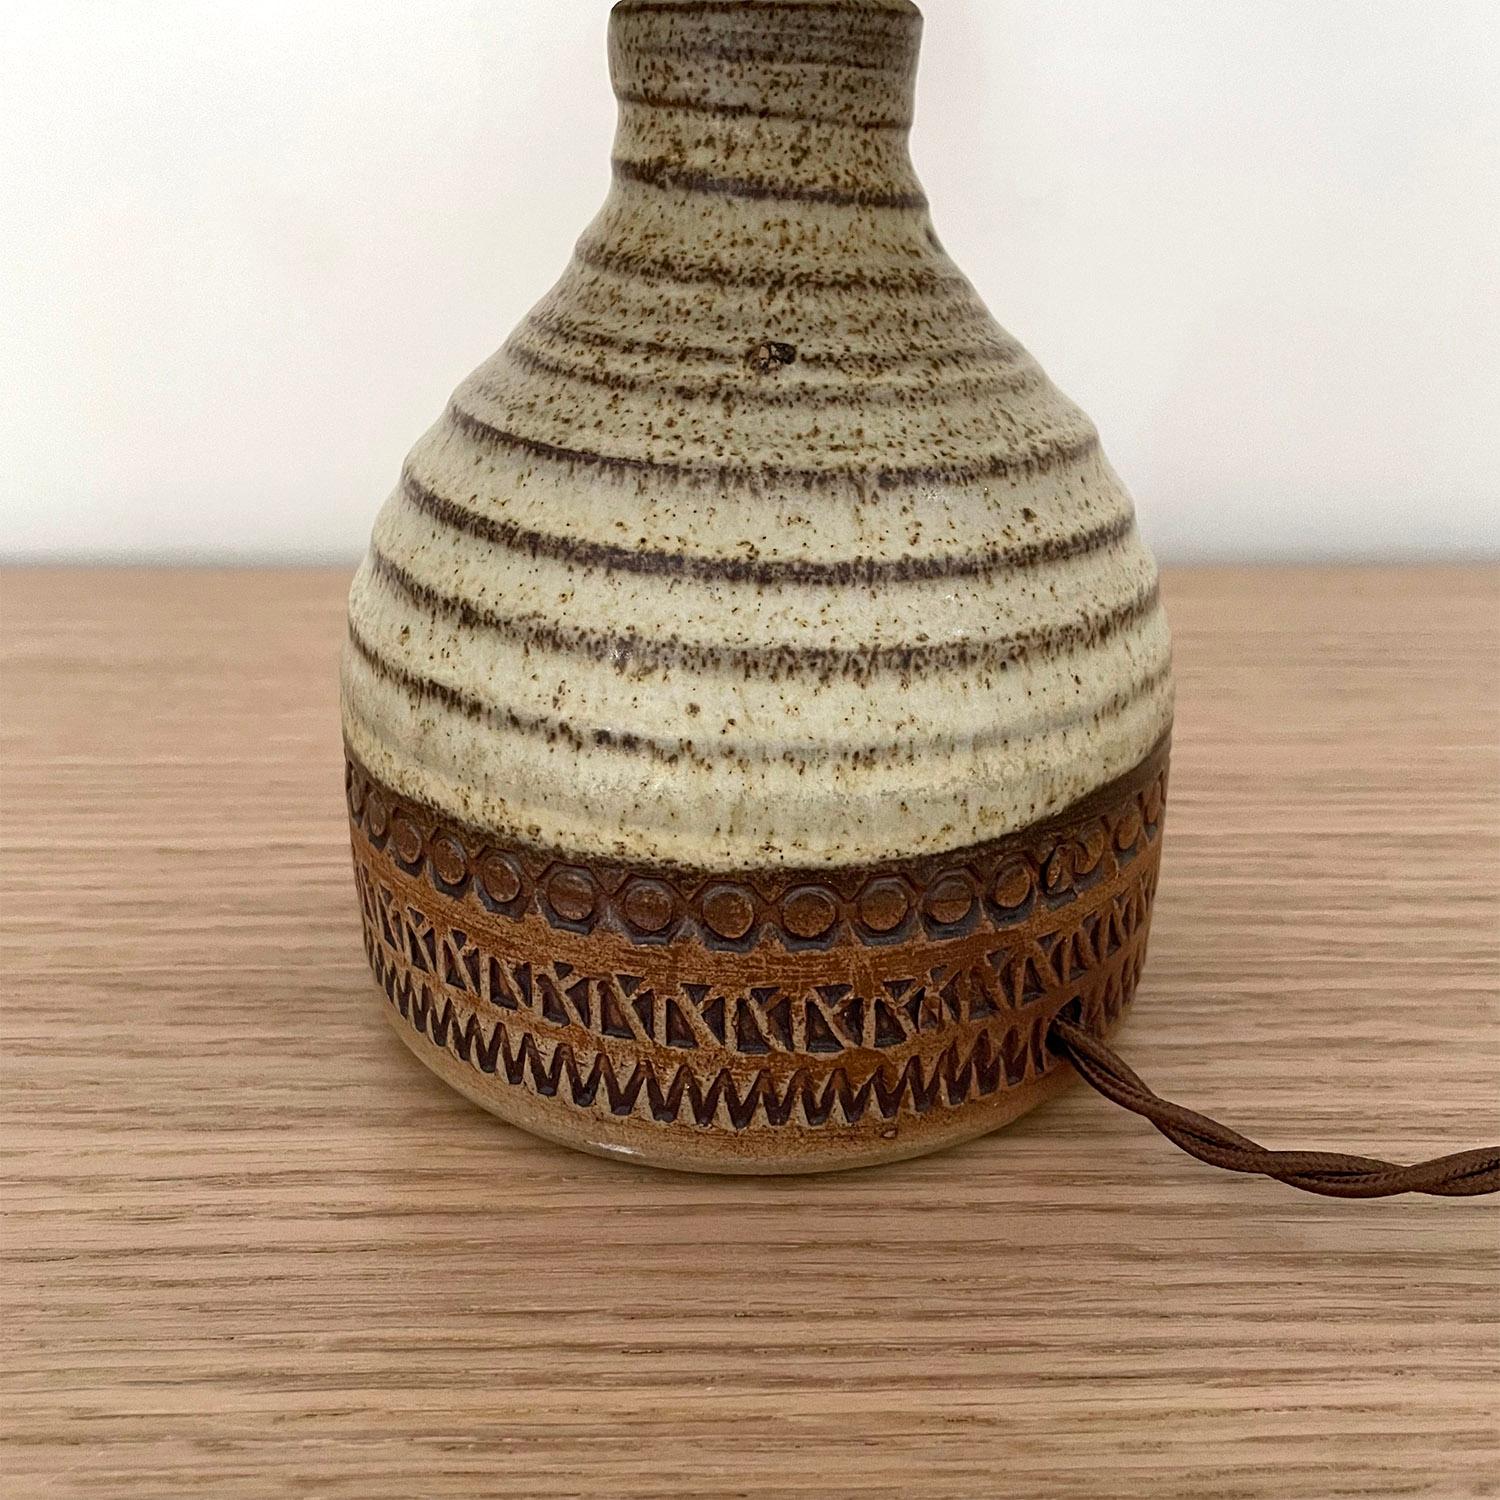 earthenware or pottery lamp bases uk